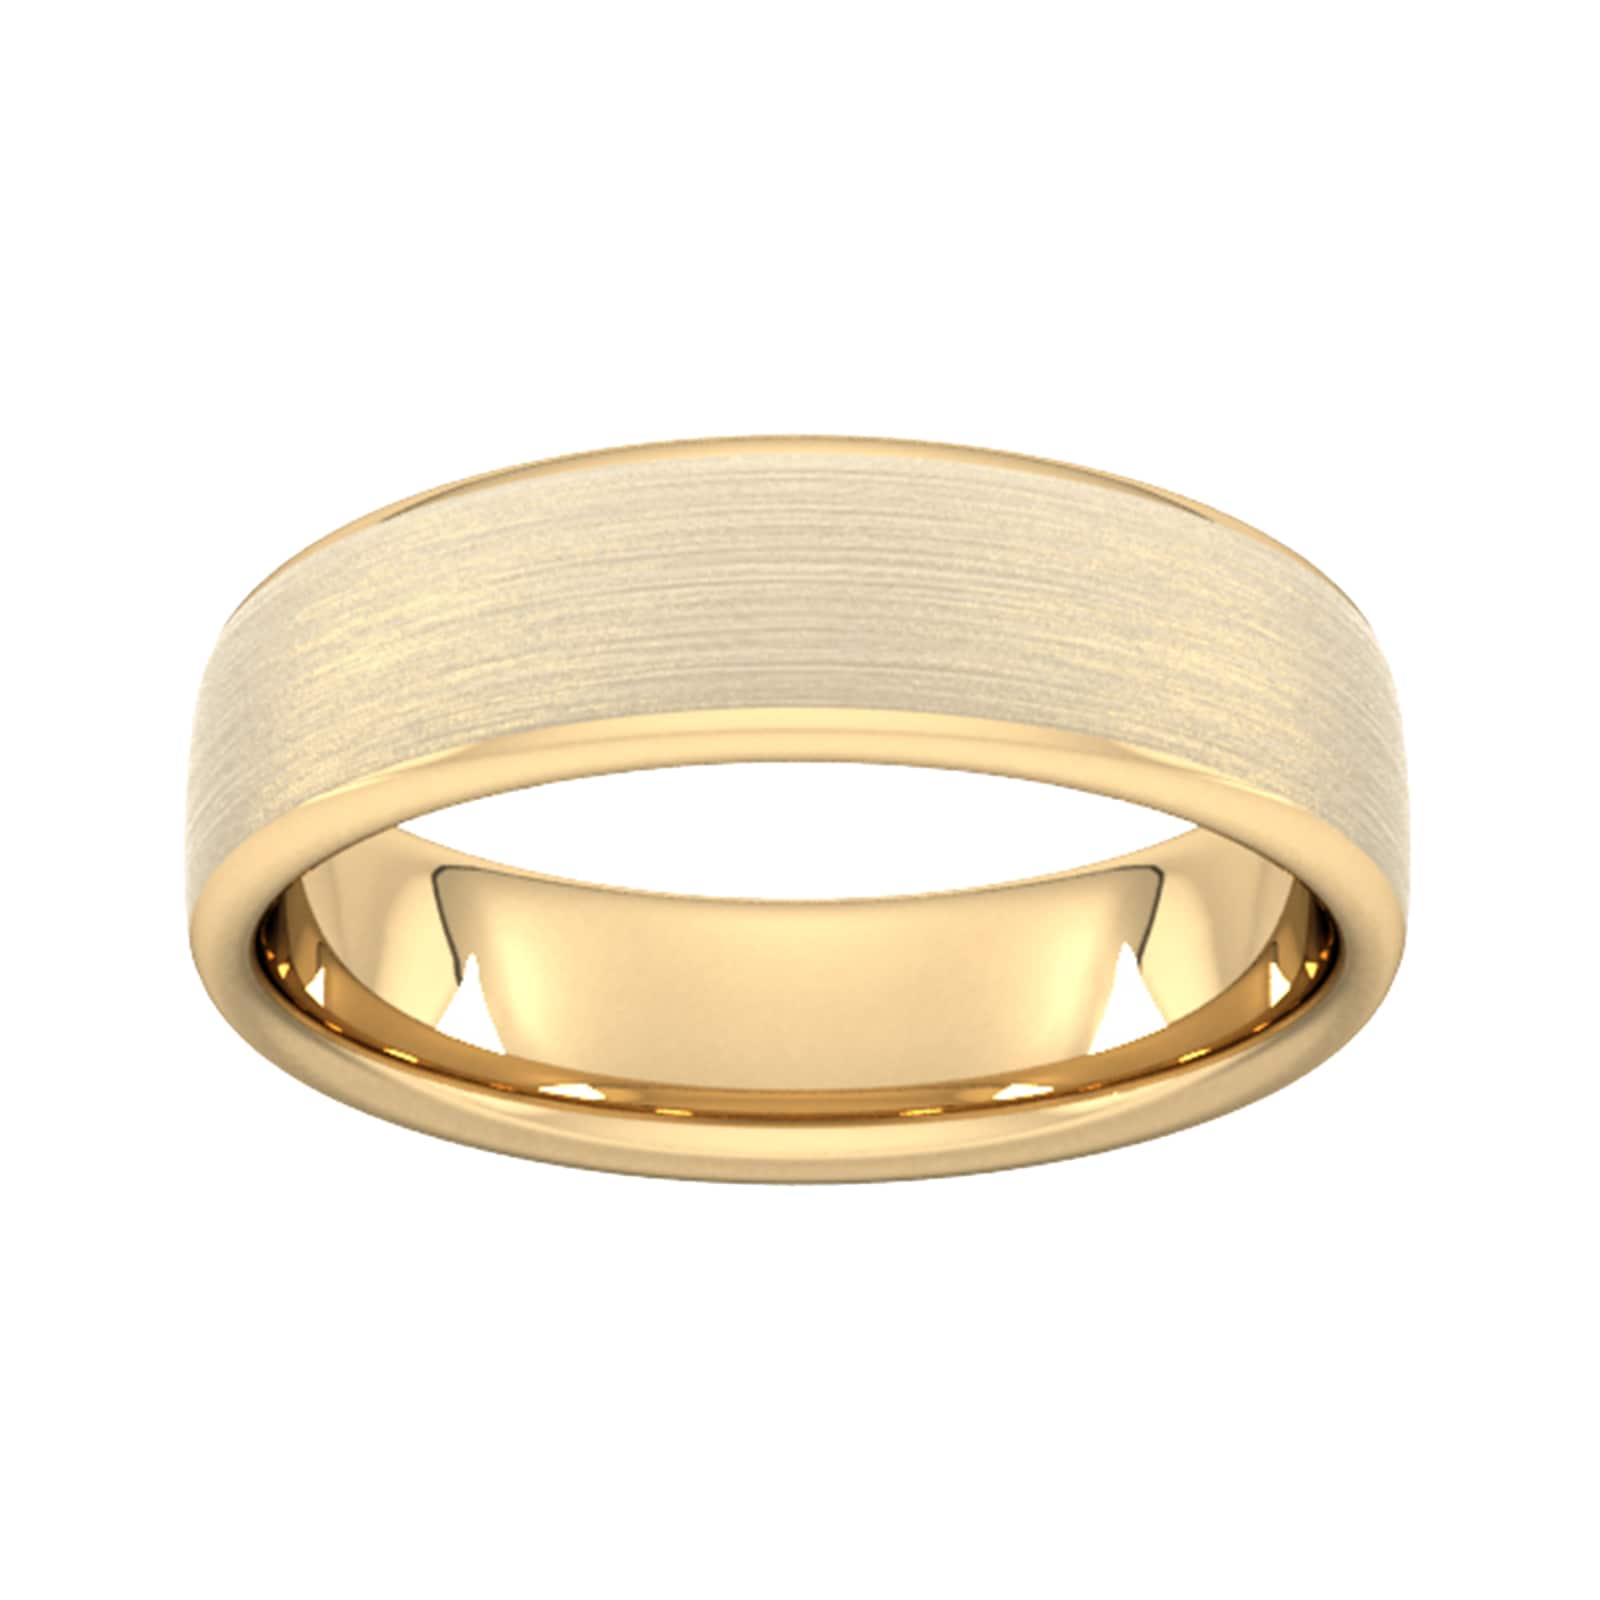 6mm Slight Court Standard Matt Finished Wedding Ring In 18 Carat Yellow Gold - Ring Size J